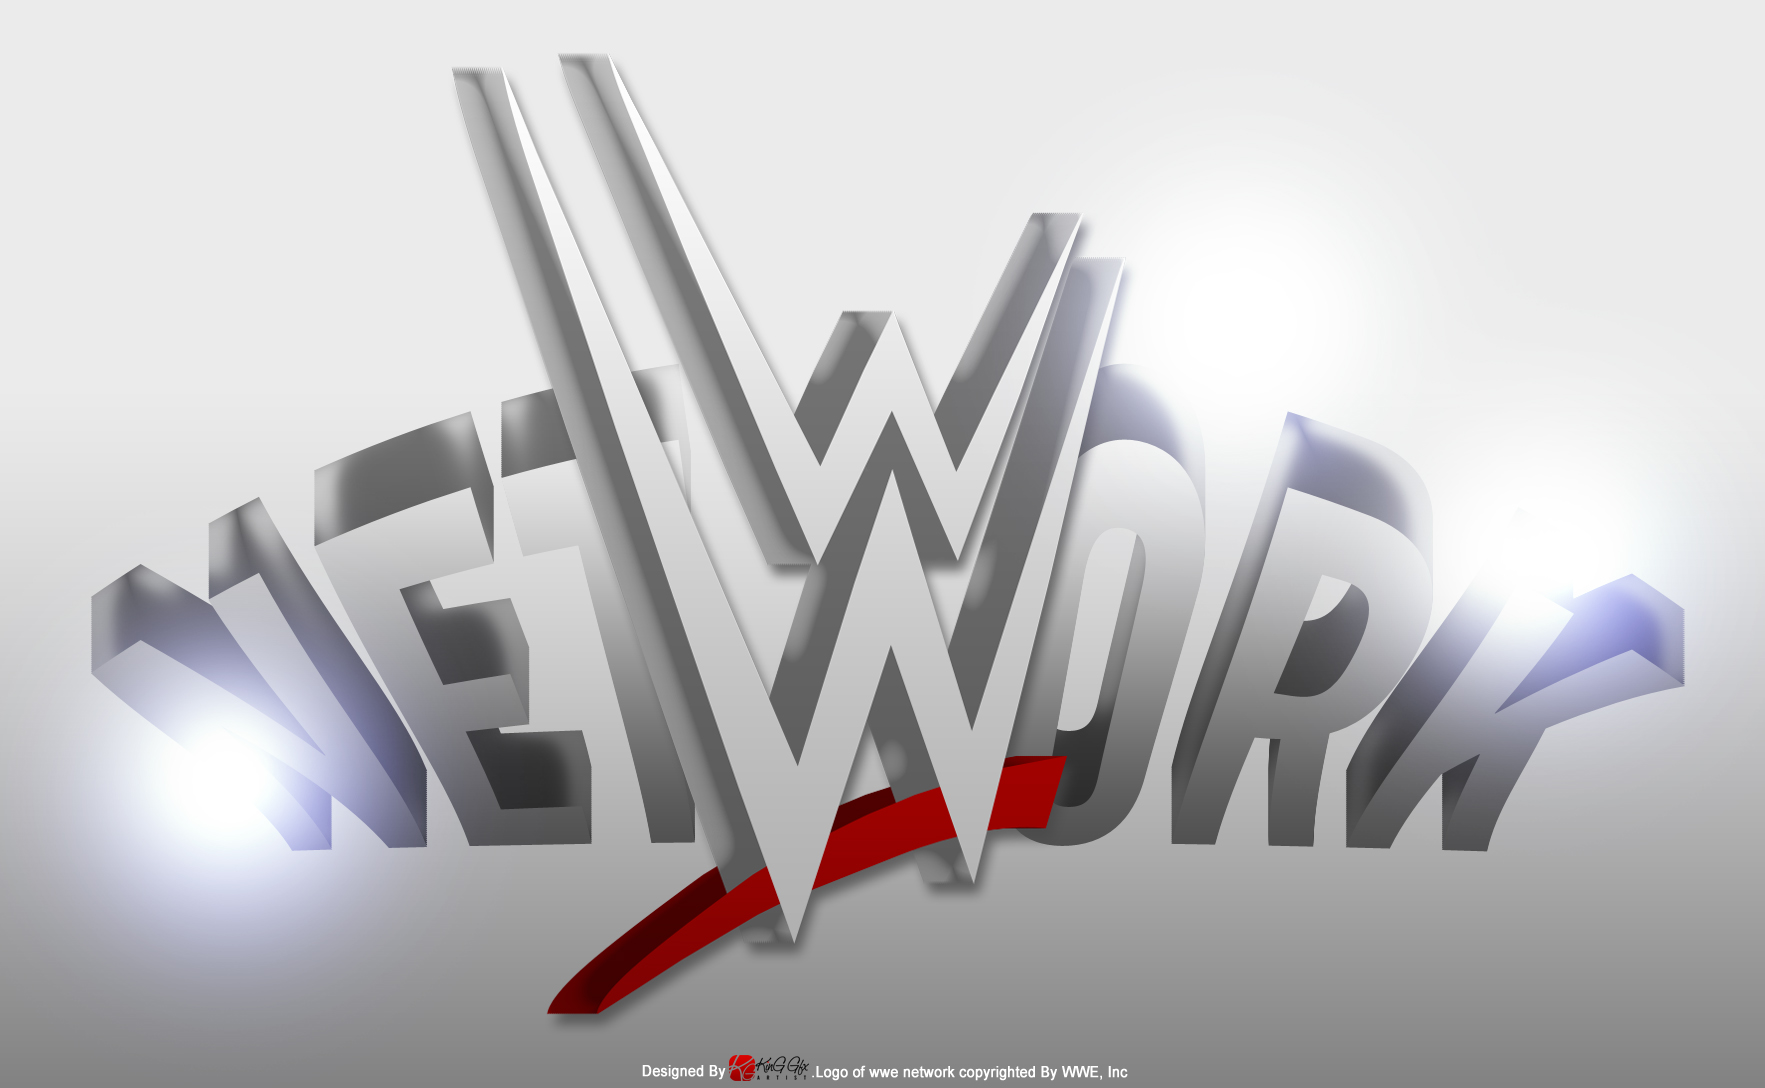 WWE NETWORK by KINGGFX1 on deviantART